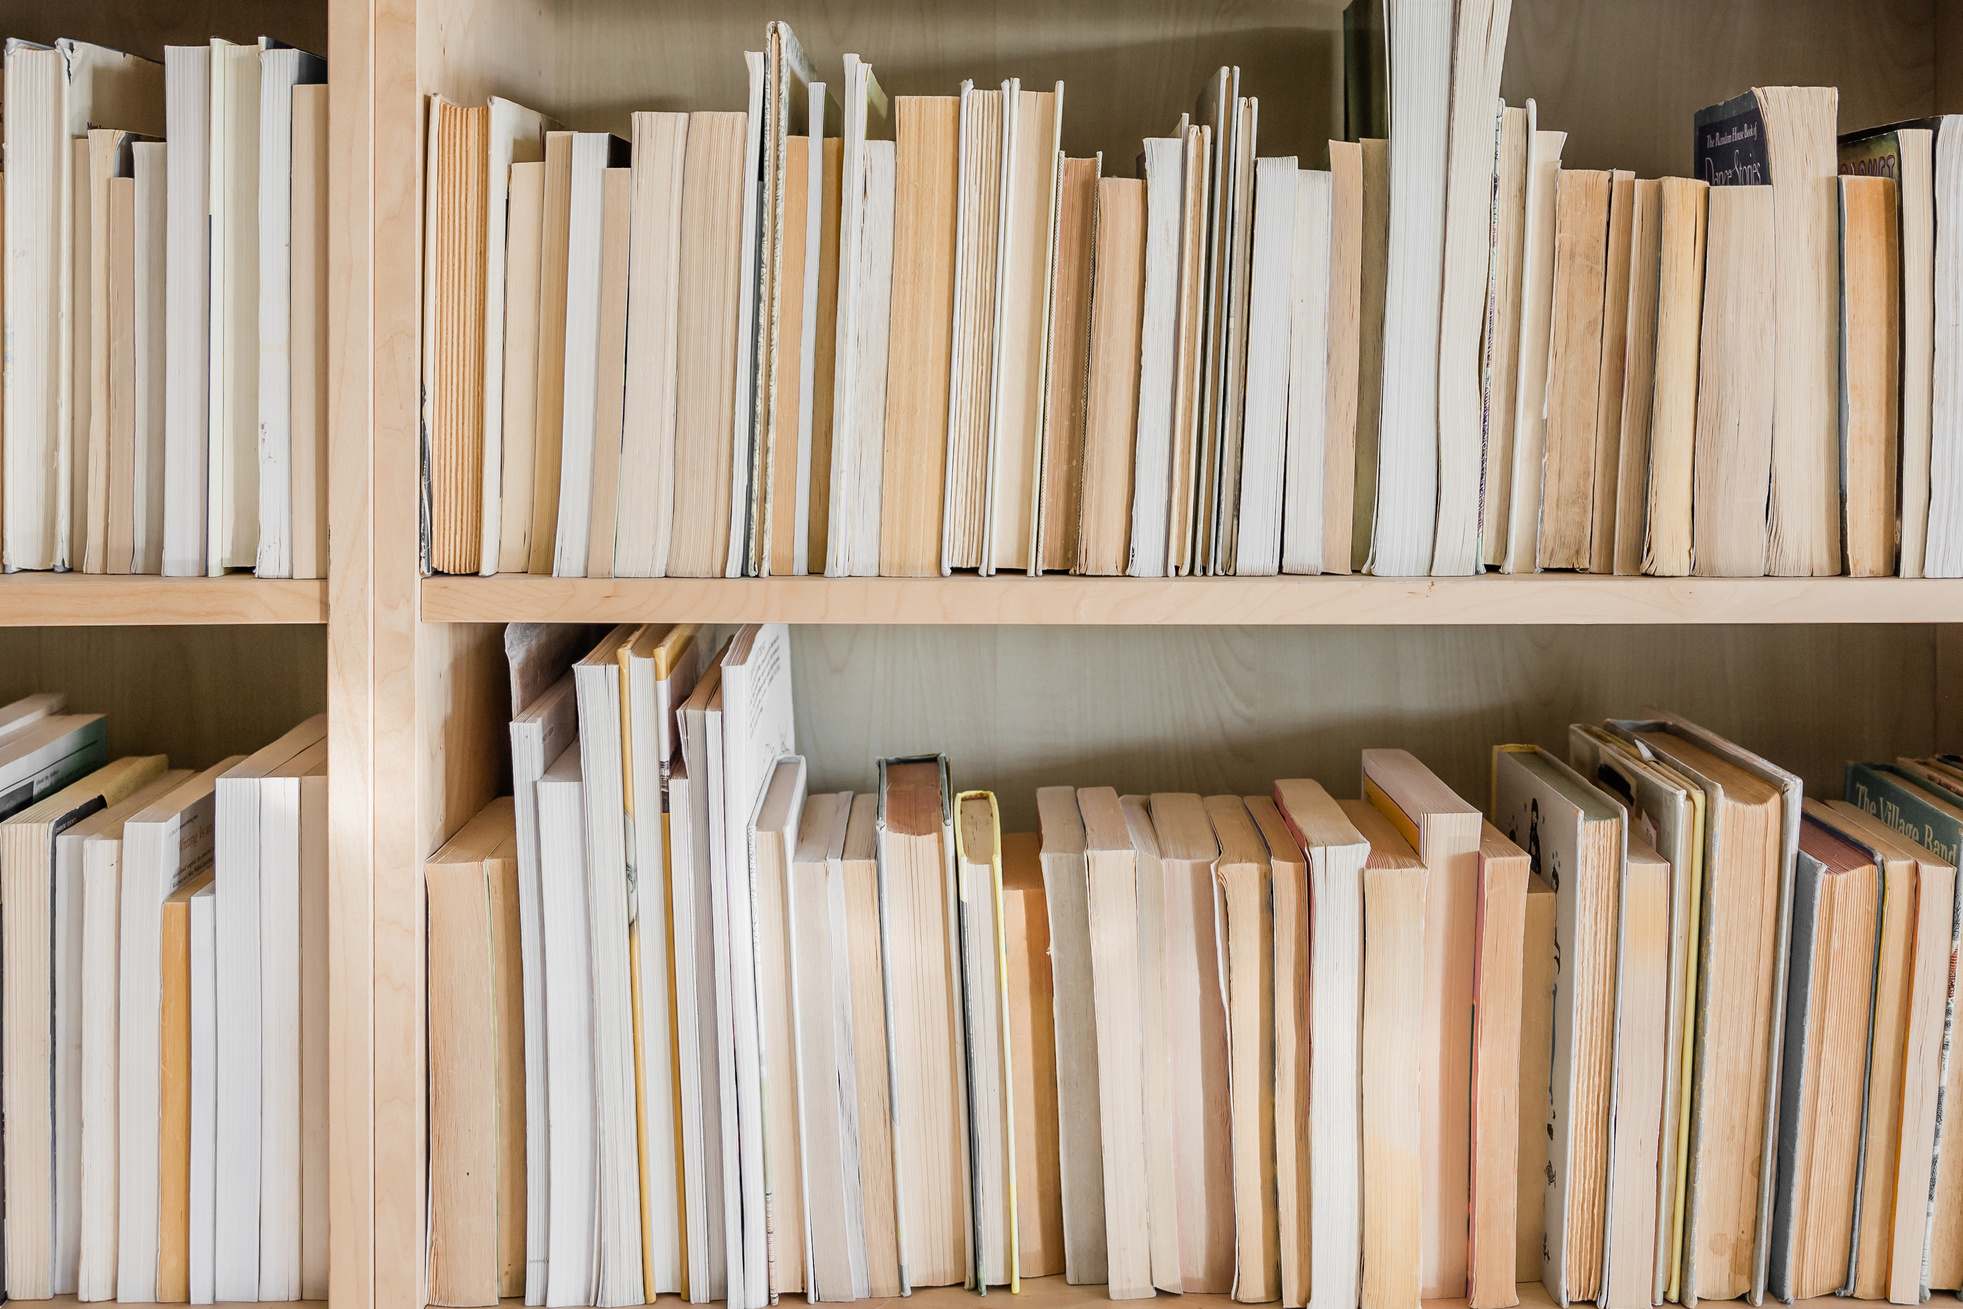 Shelves Filled with Vintage Books